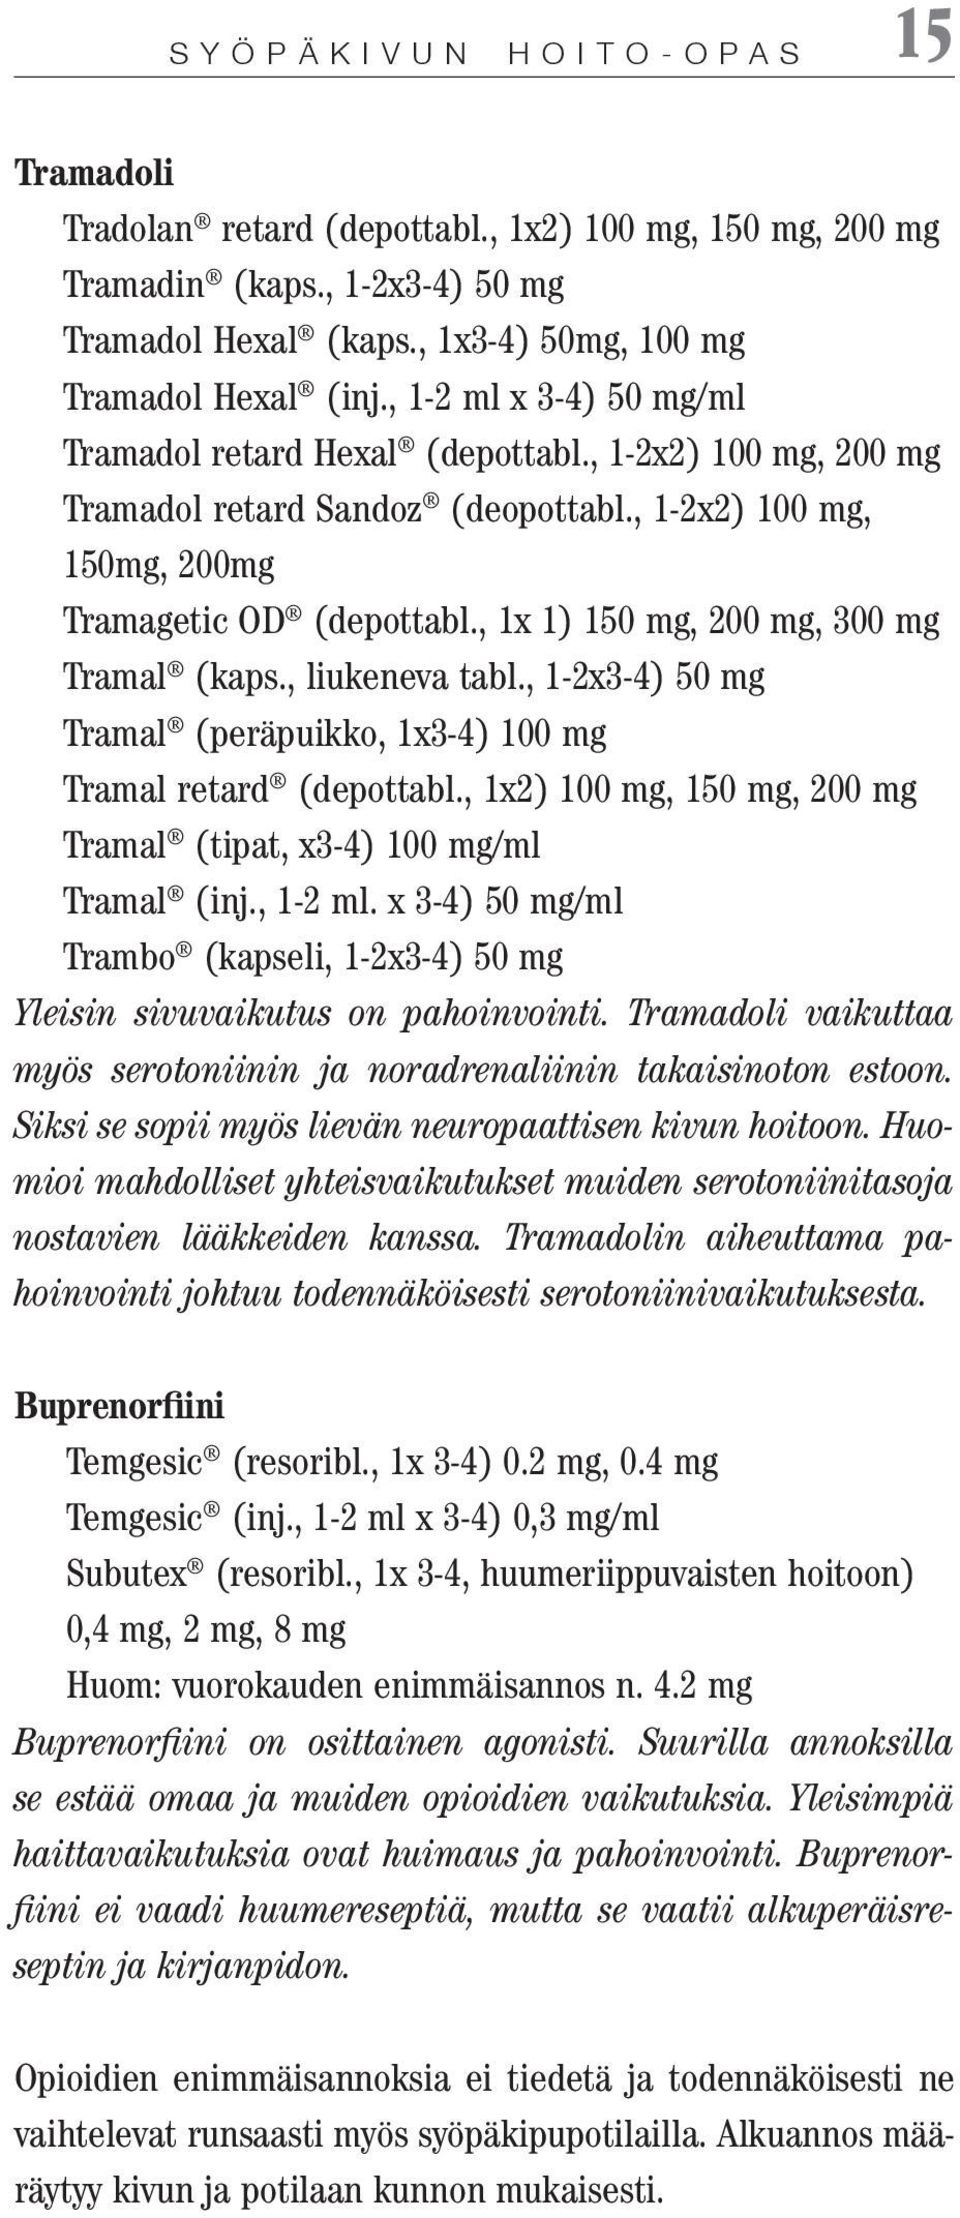 , 1x 1) 150 mg, 200 mg, 300 mg Tramal (kaps., liukeneva tabl., 1-2x3-4) 50 mg Tramal (peräpuikko, 1x3-4) 100 mg Tramal retard (depottabl.